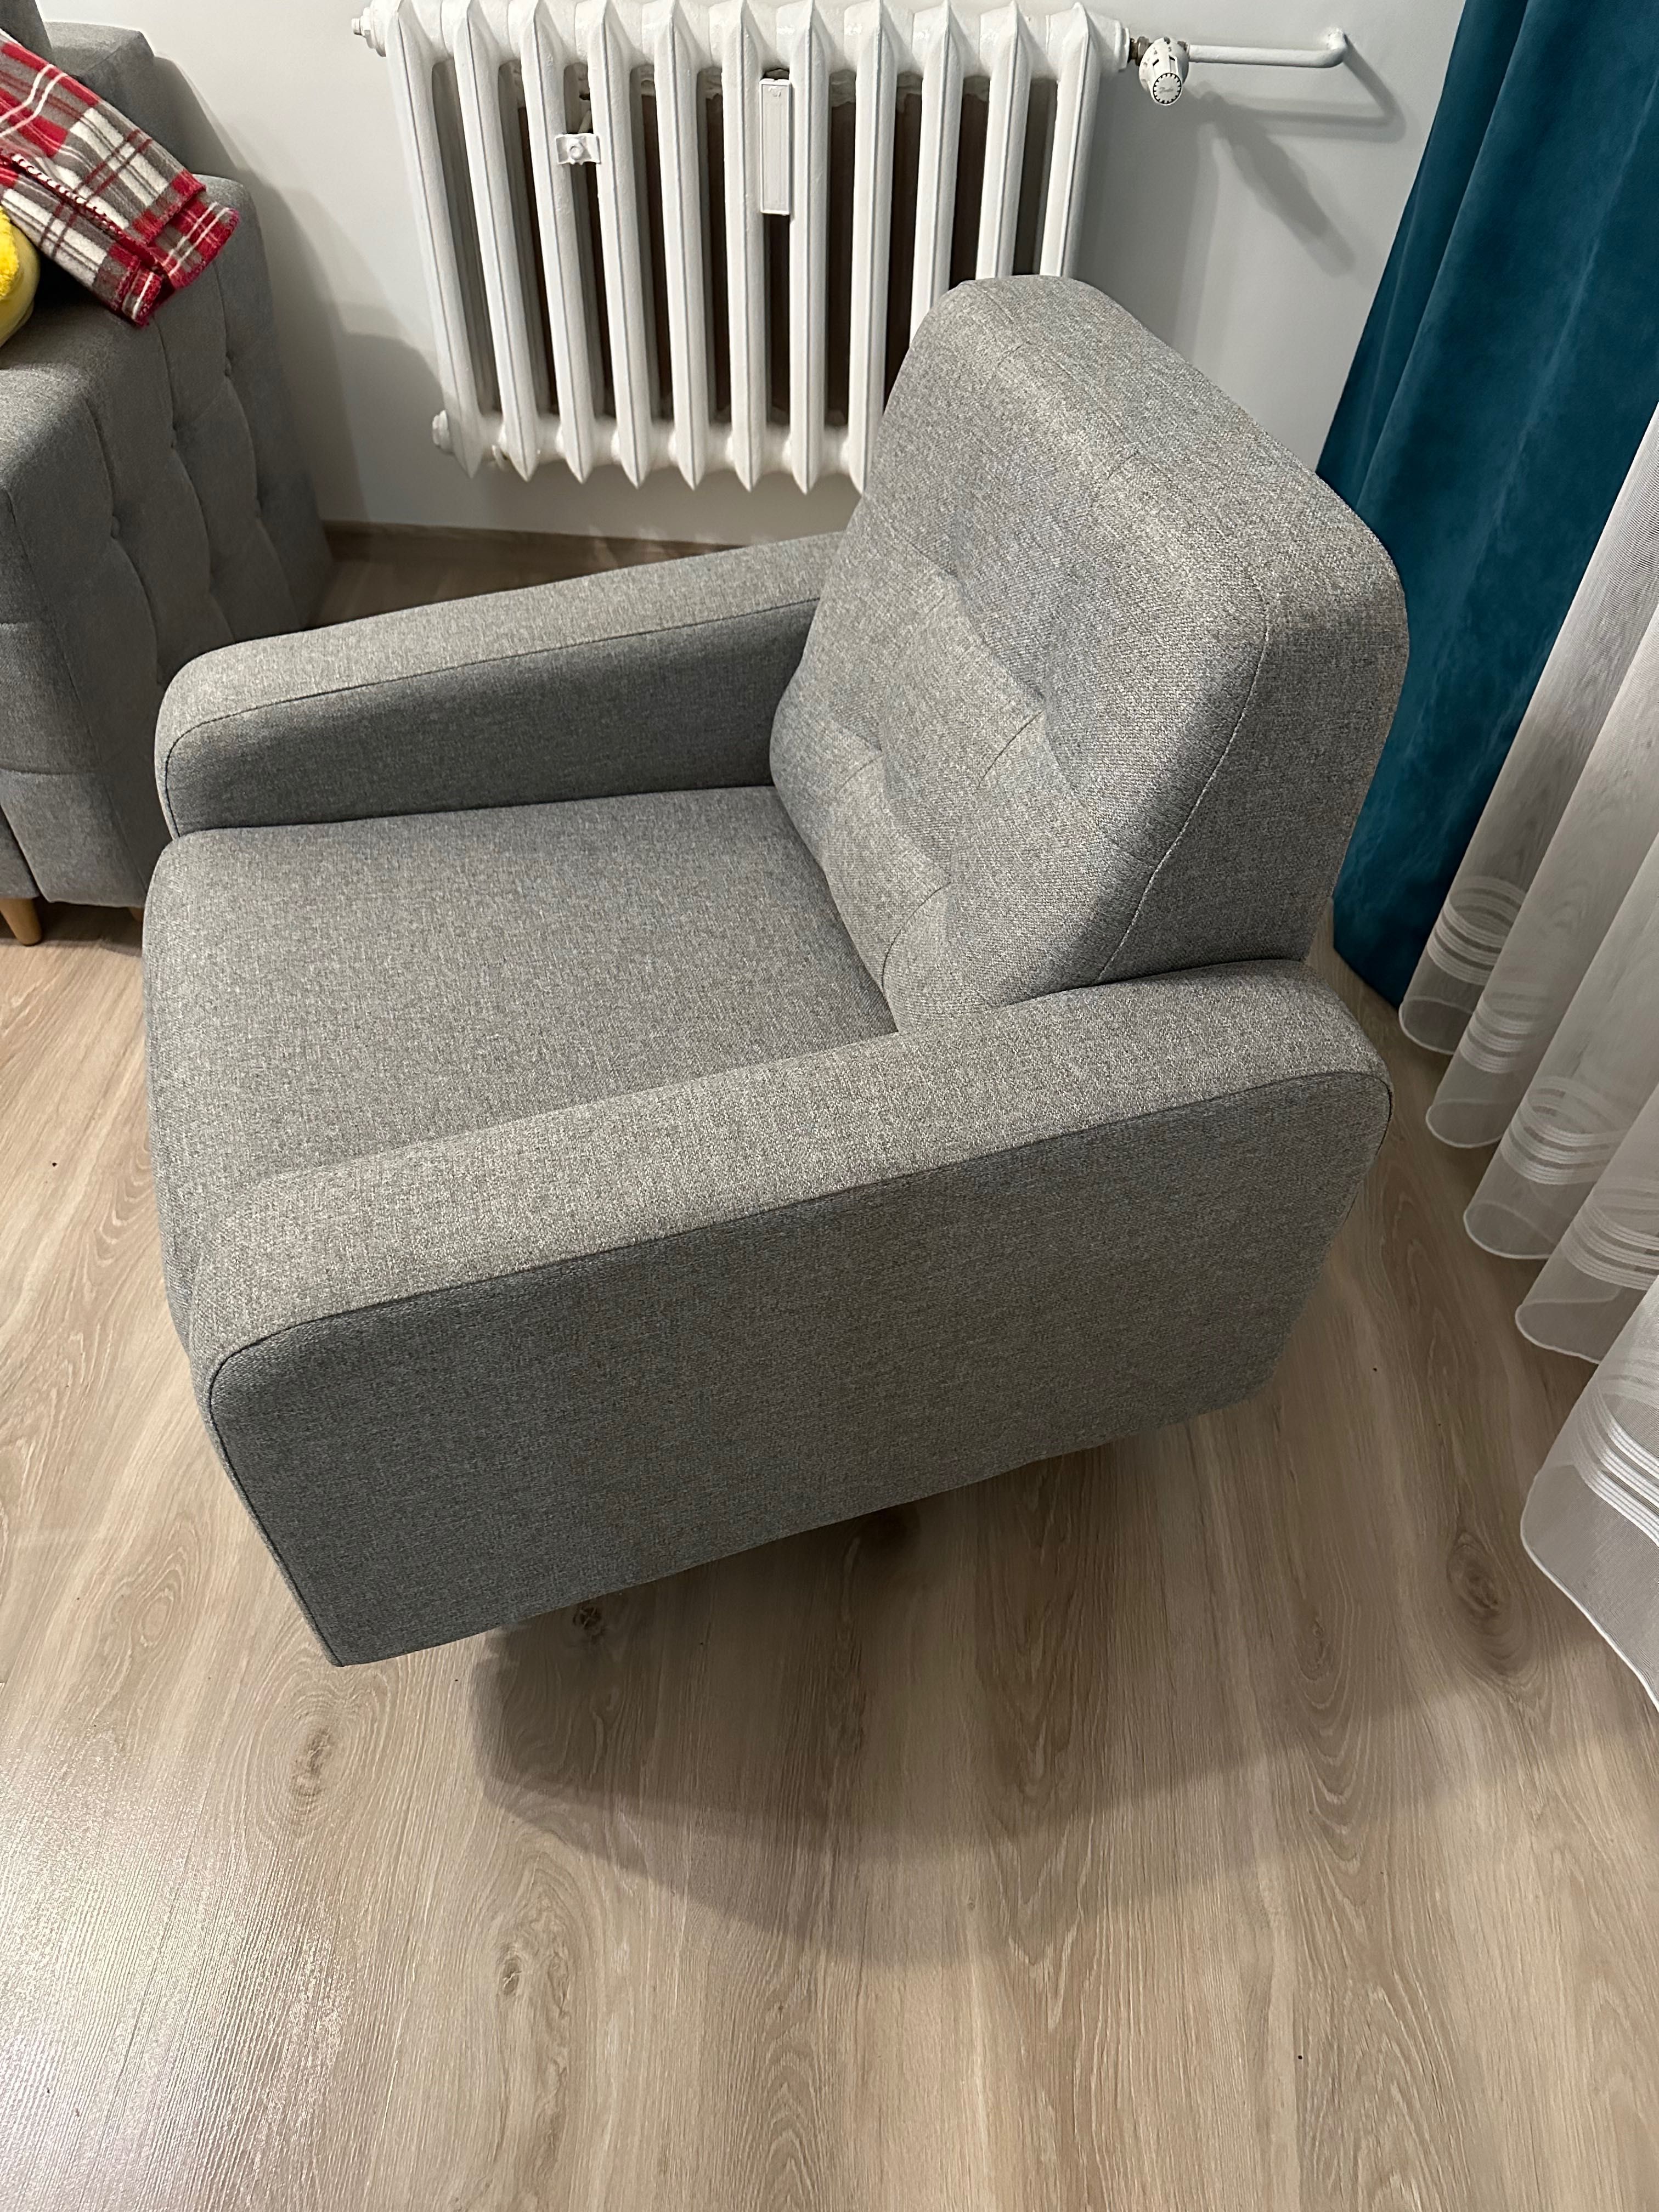 Kanapa (sofa) + fotel + stolik